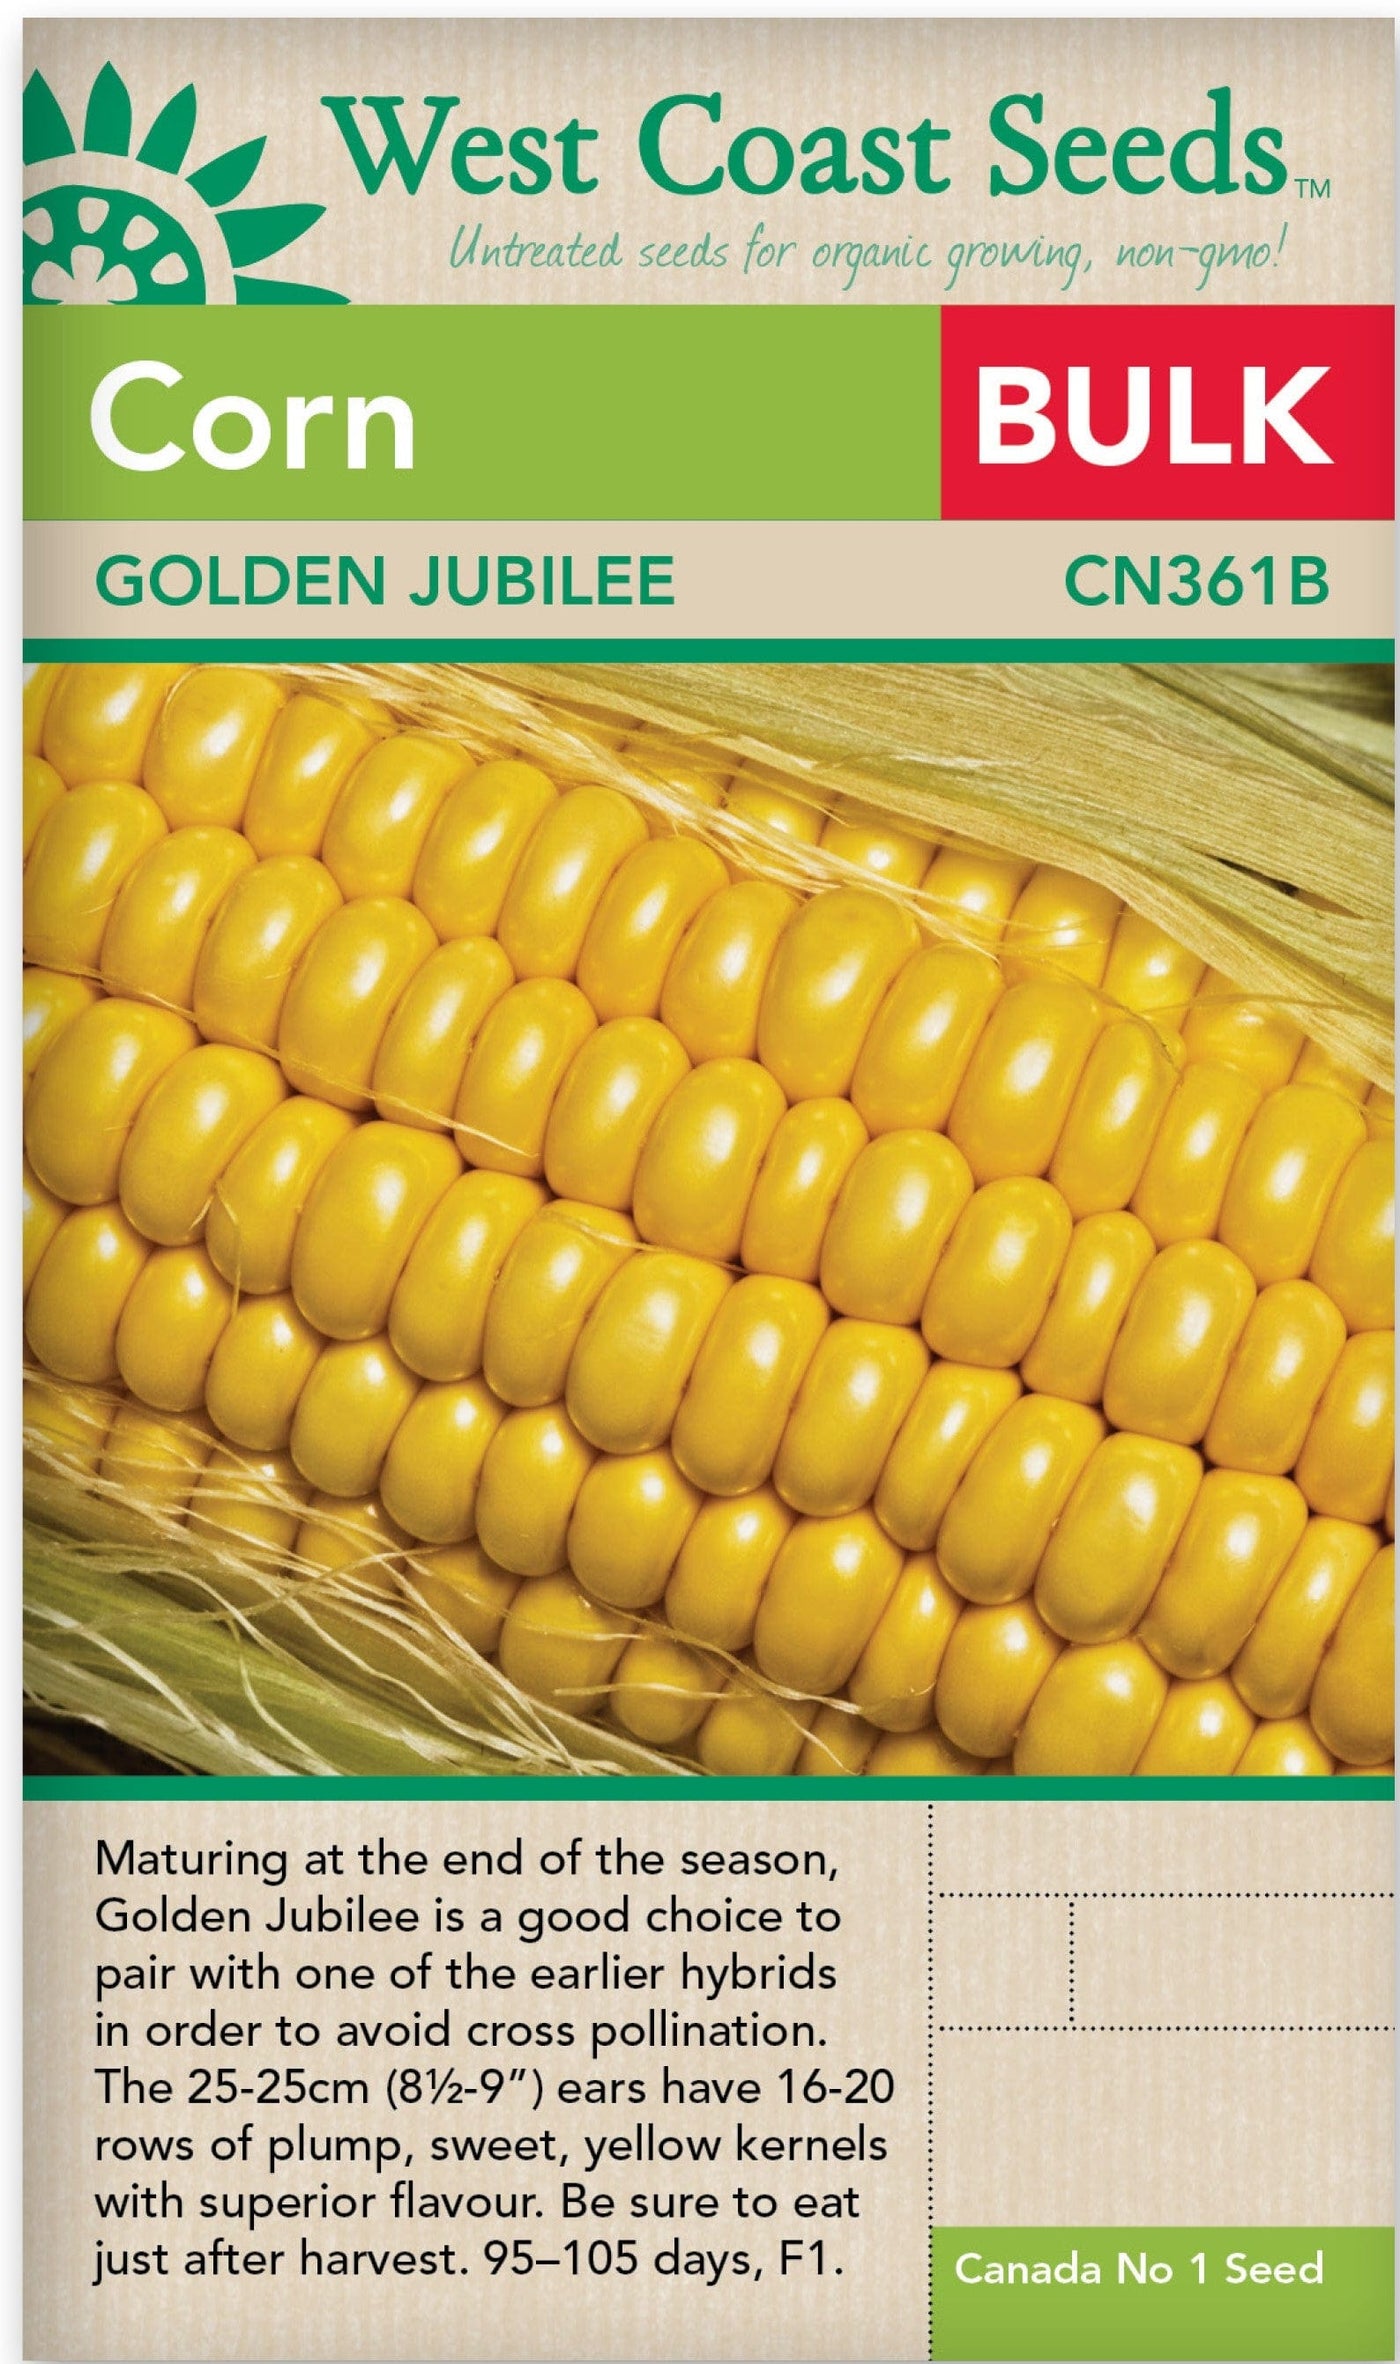 BULK Corn Golden Jubilee - West Coast Seeds